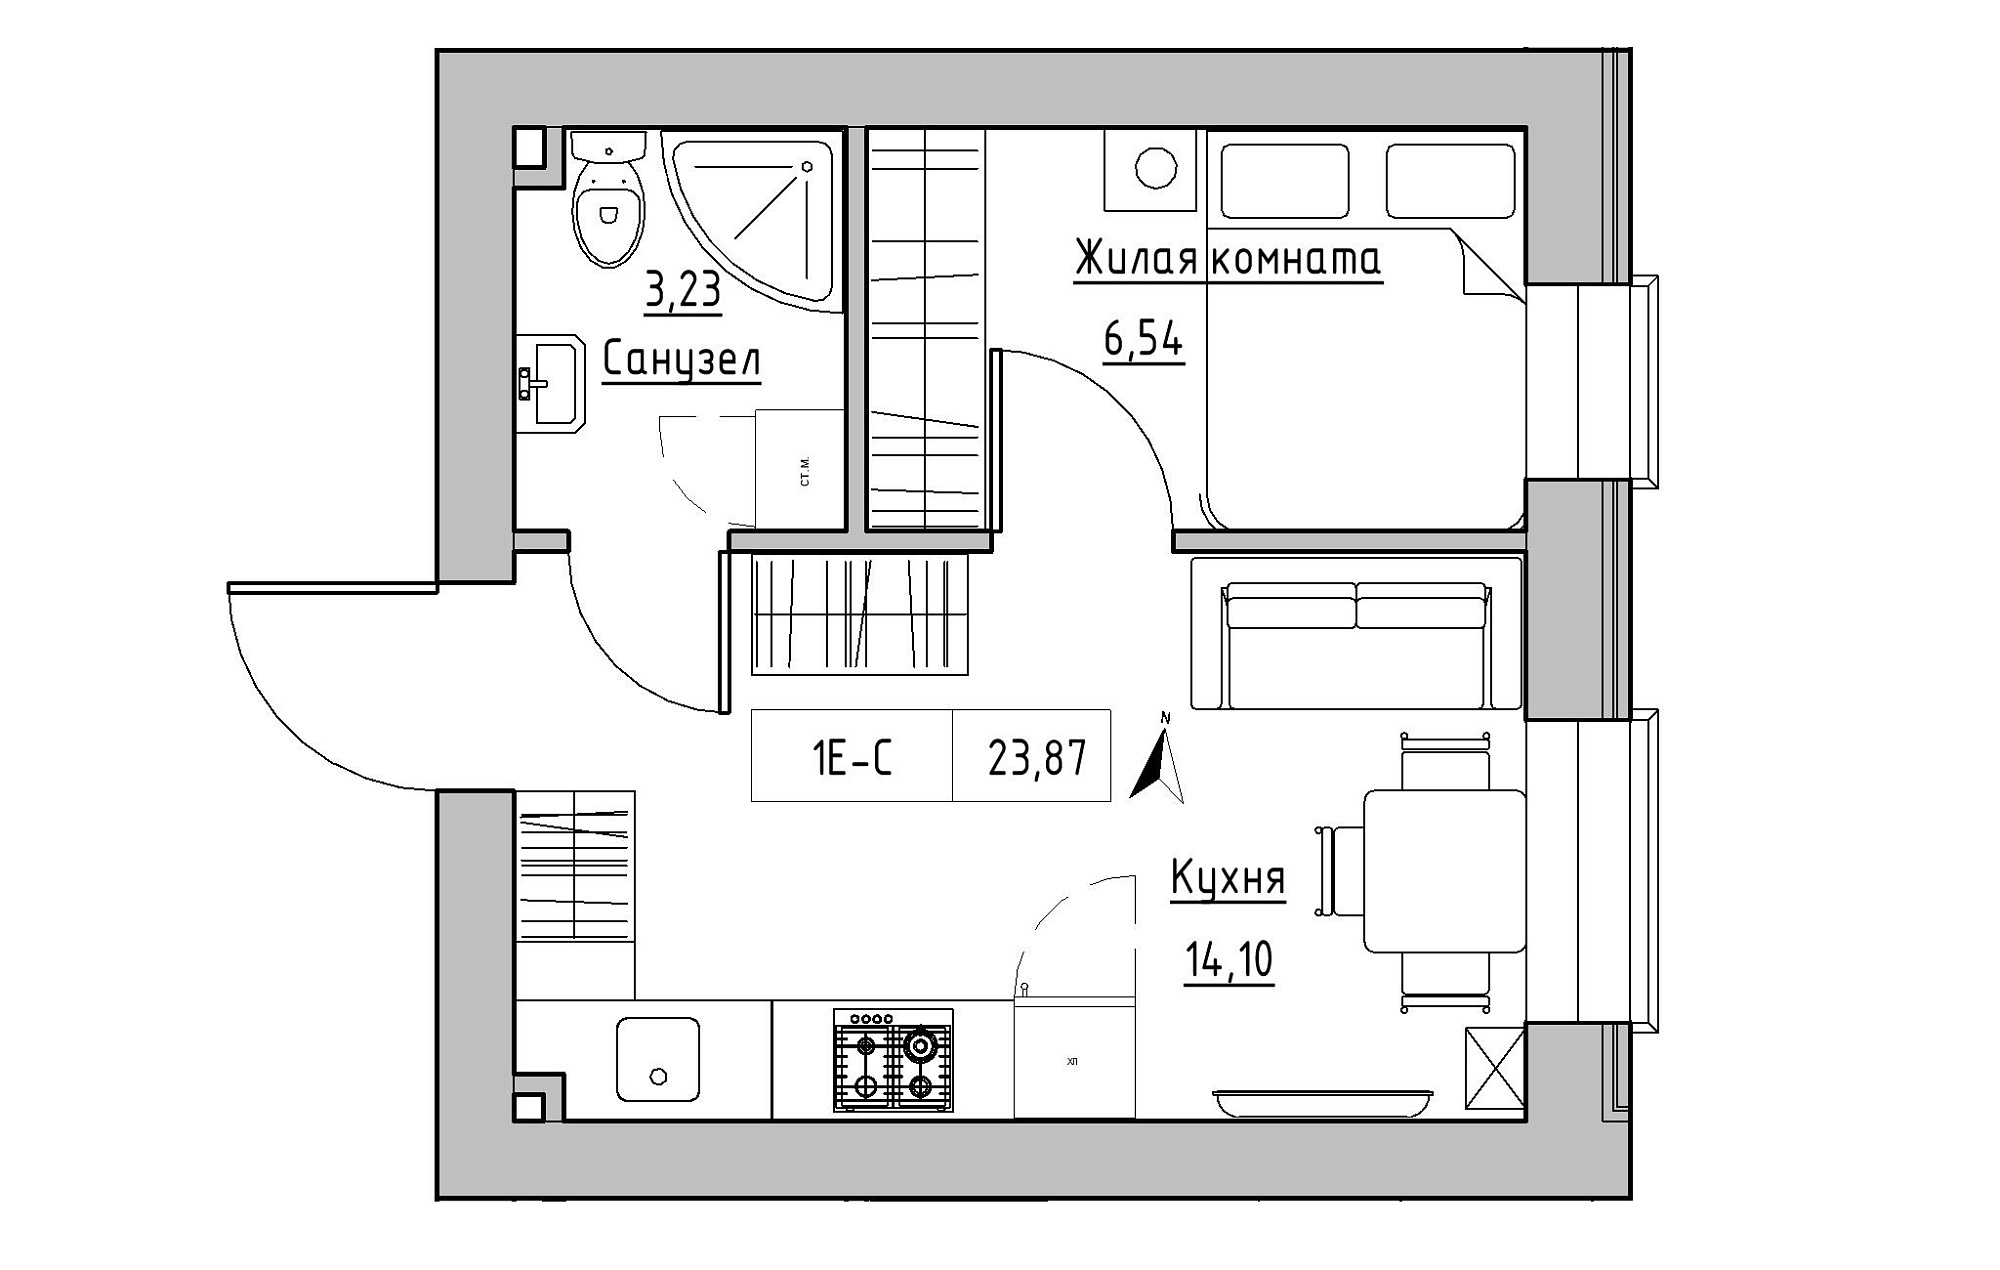 Planning 1-rm flats area 23.87m2, KS-019-04/0004.